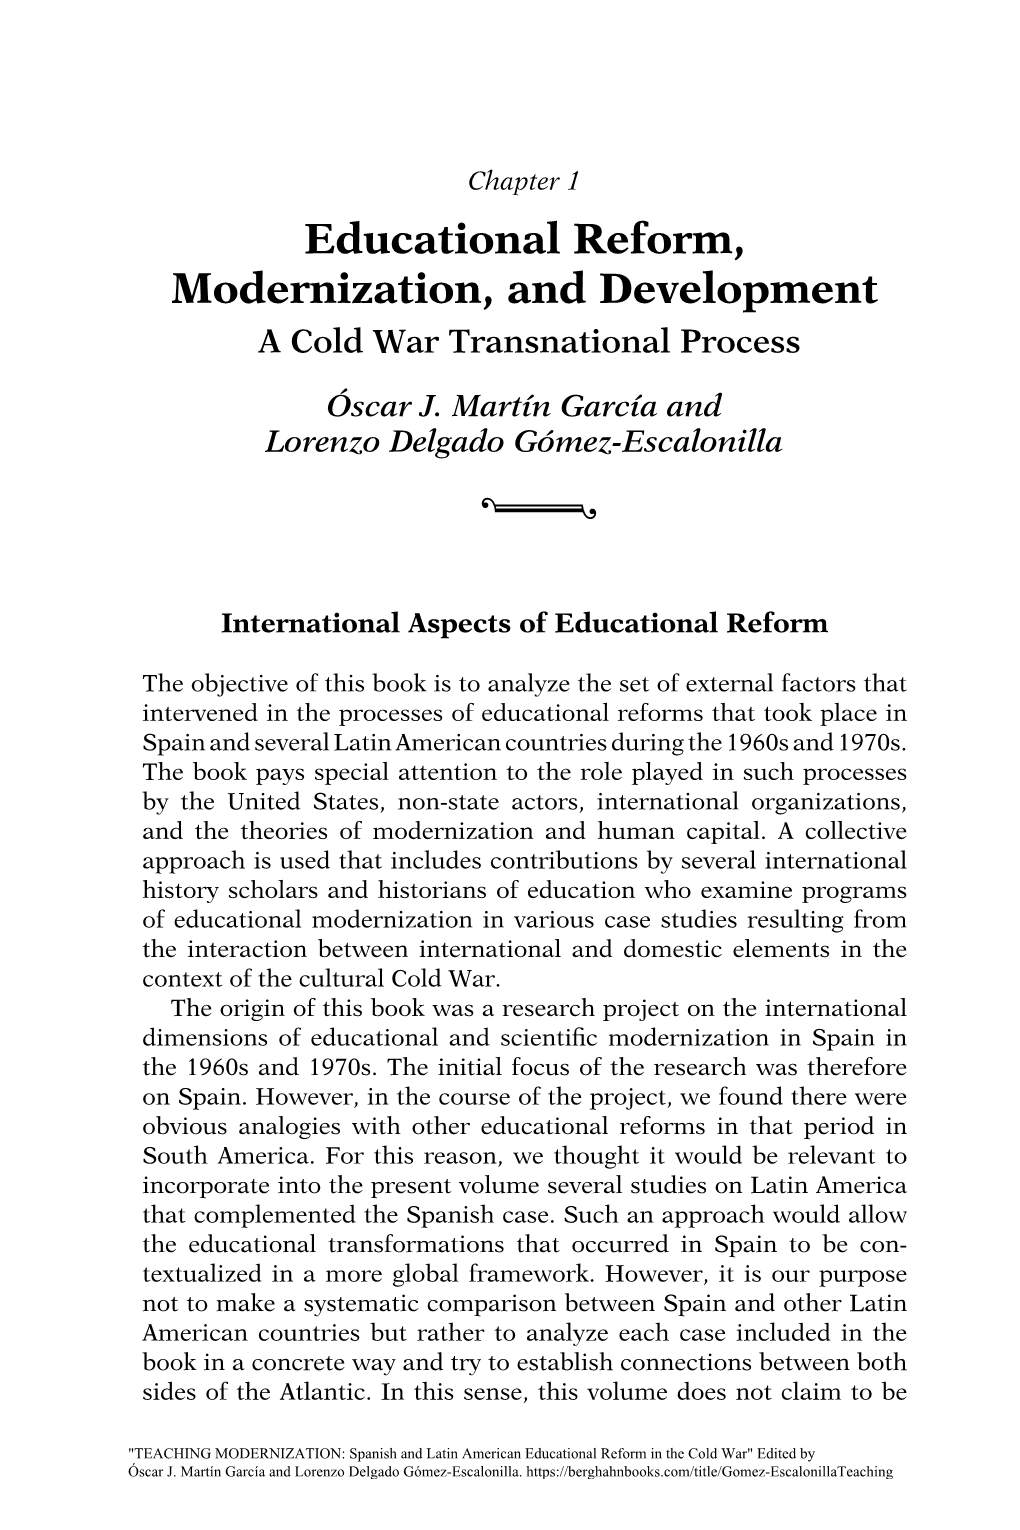 Educational Reform, Modernization and Development: a Cold War Transnational Process